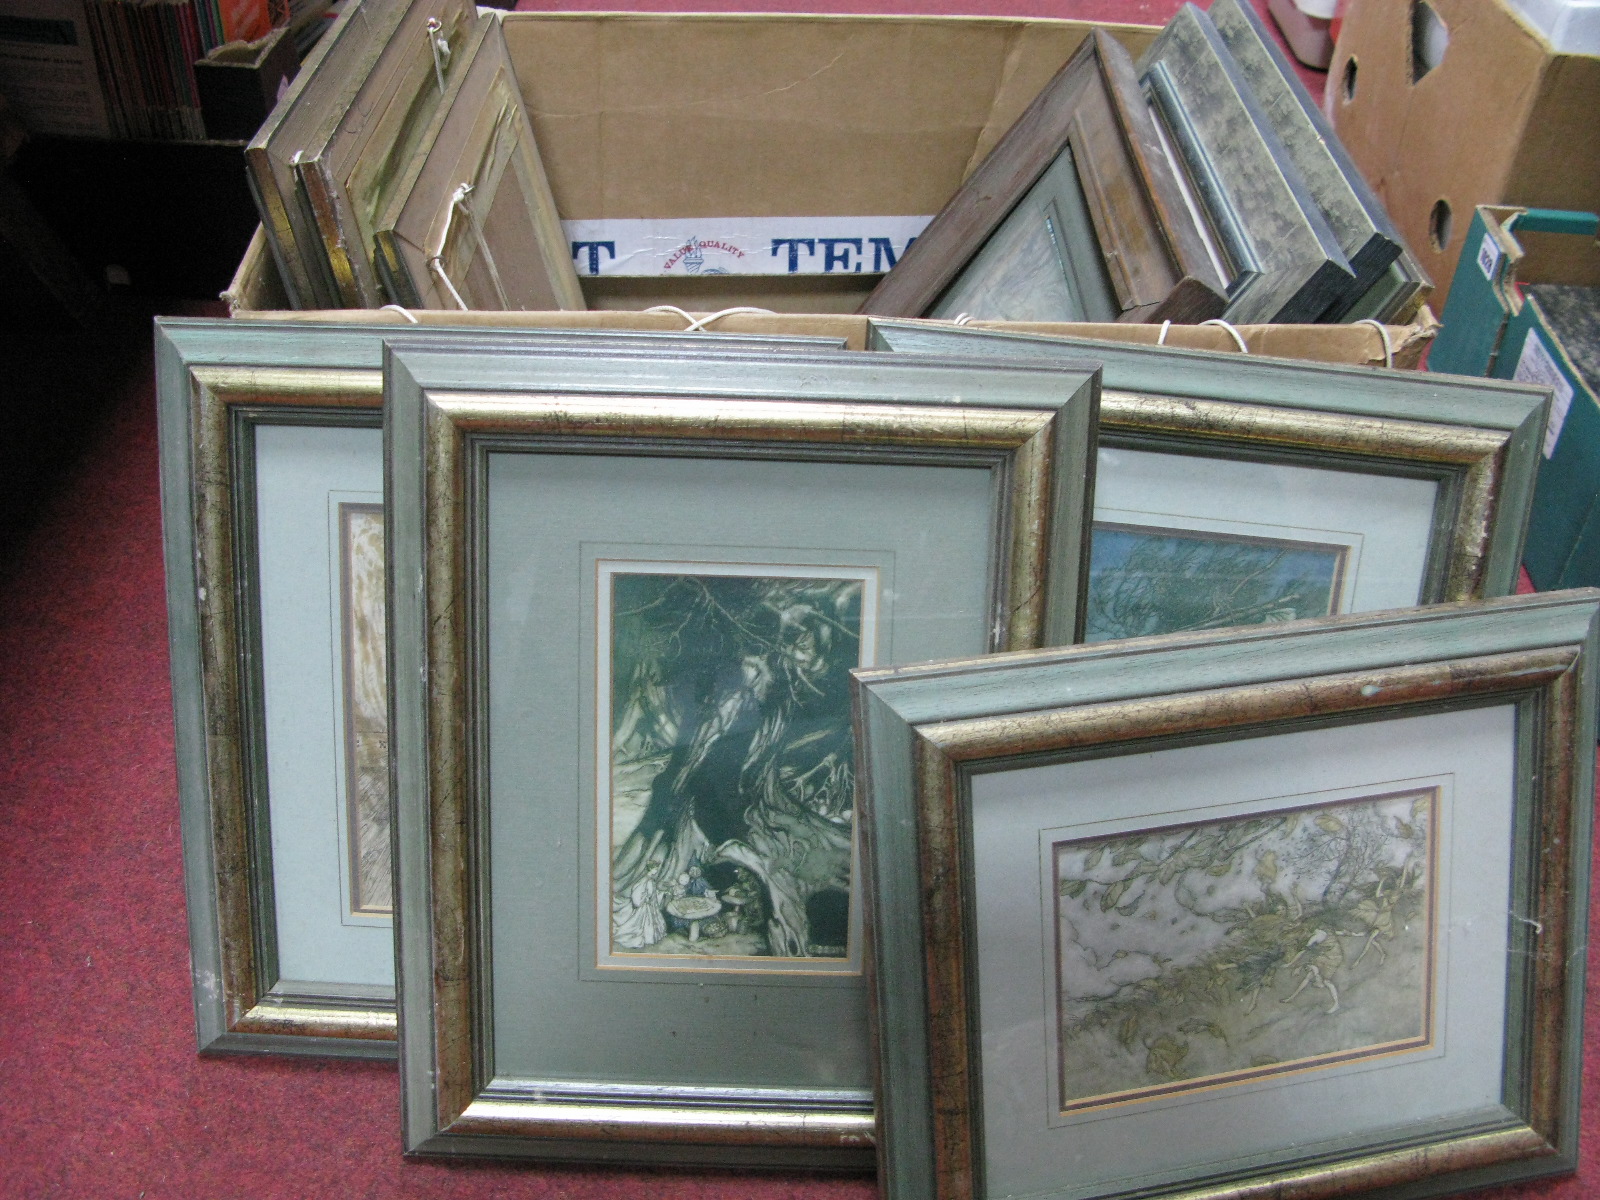 Arhur Rackham - eleven coloured book prints framed plus others loose:- One Box